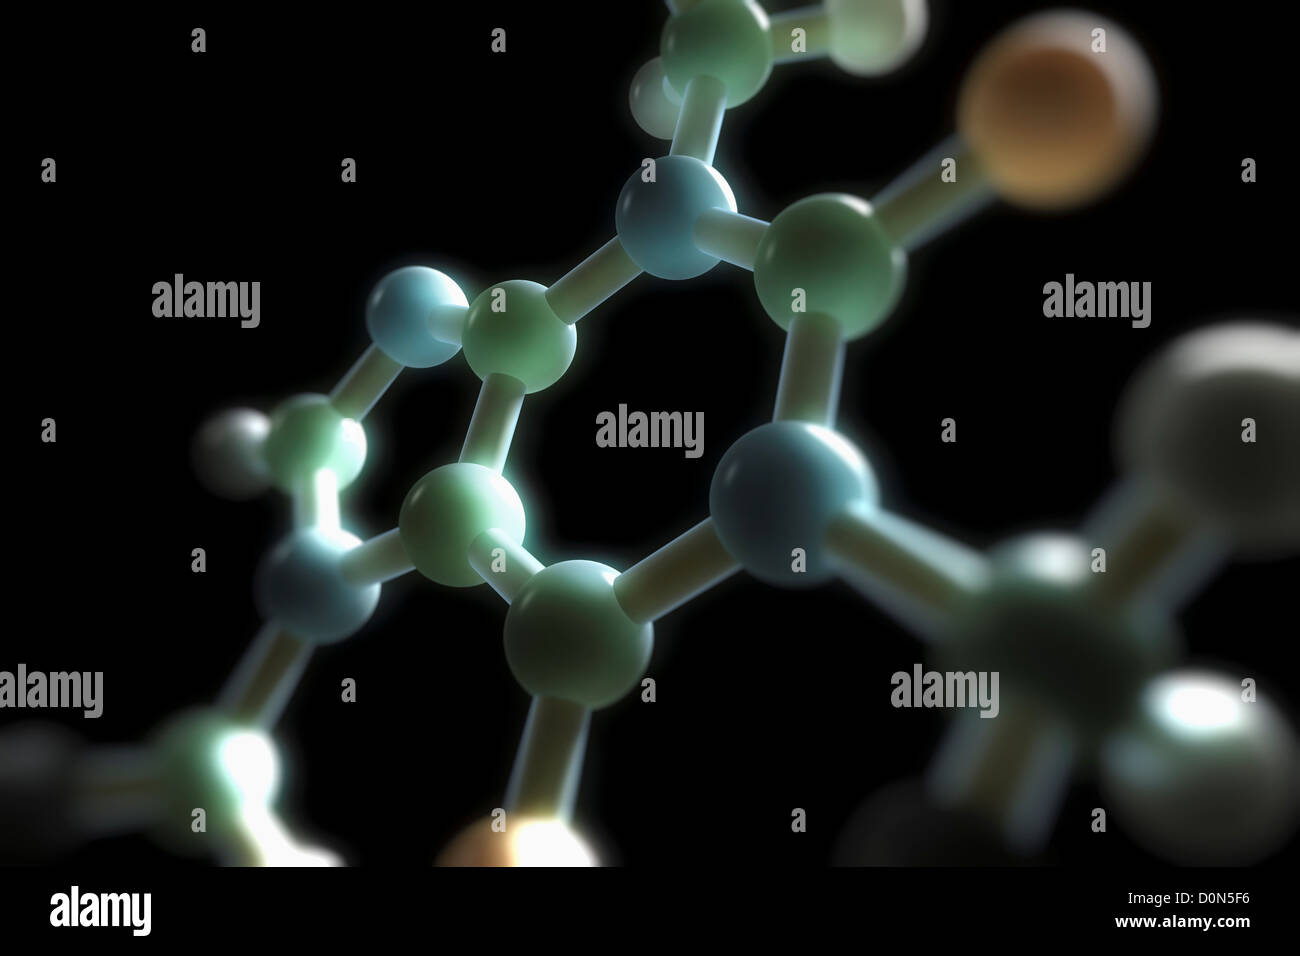 Caffeine molecular model. Caffeine acts as a central nervous system stimulant. Stock Photo